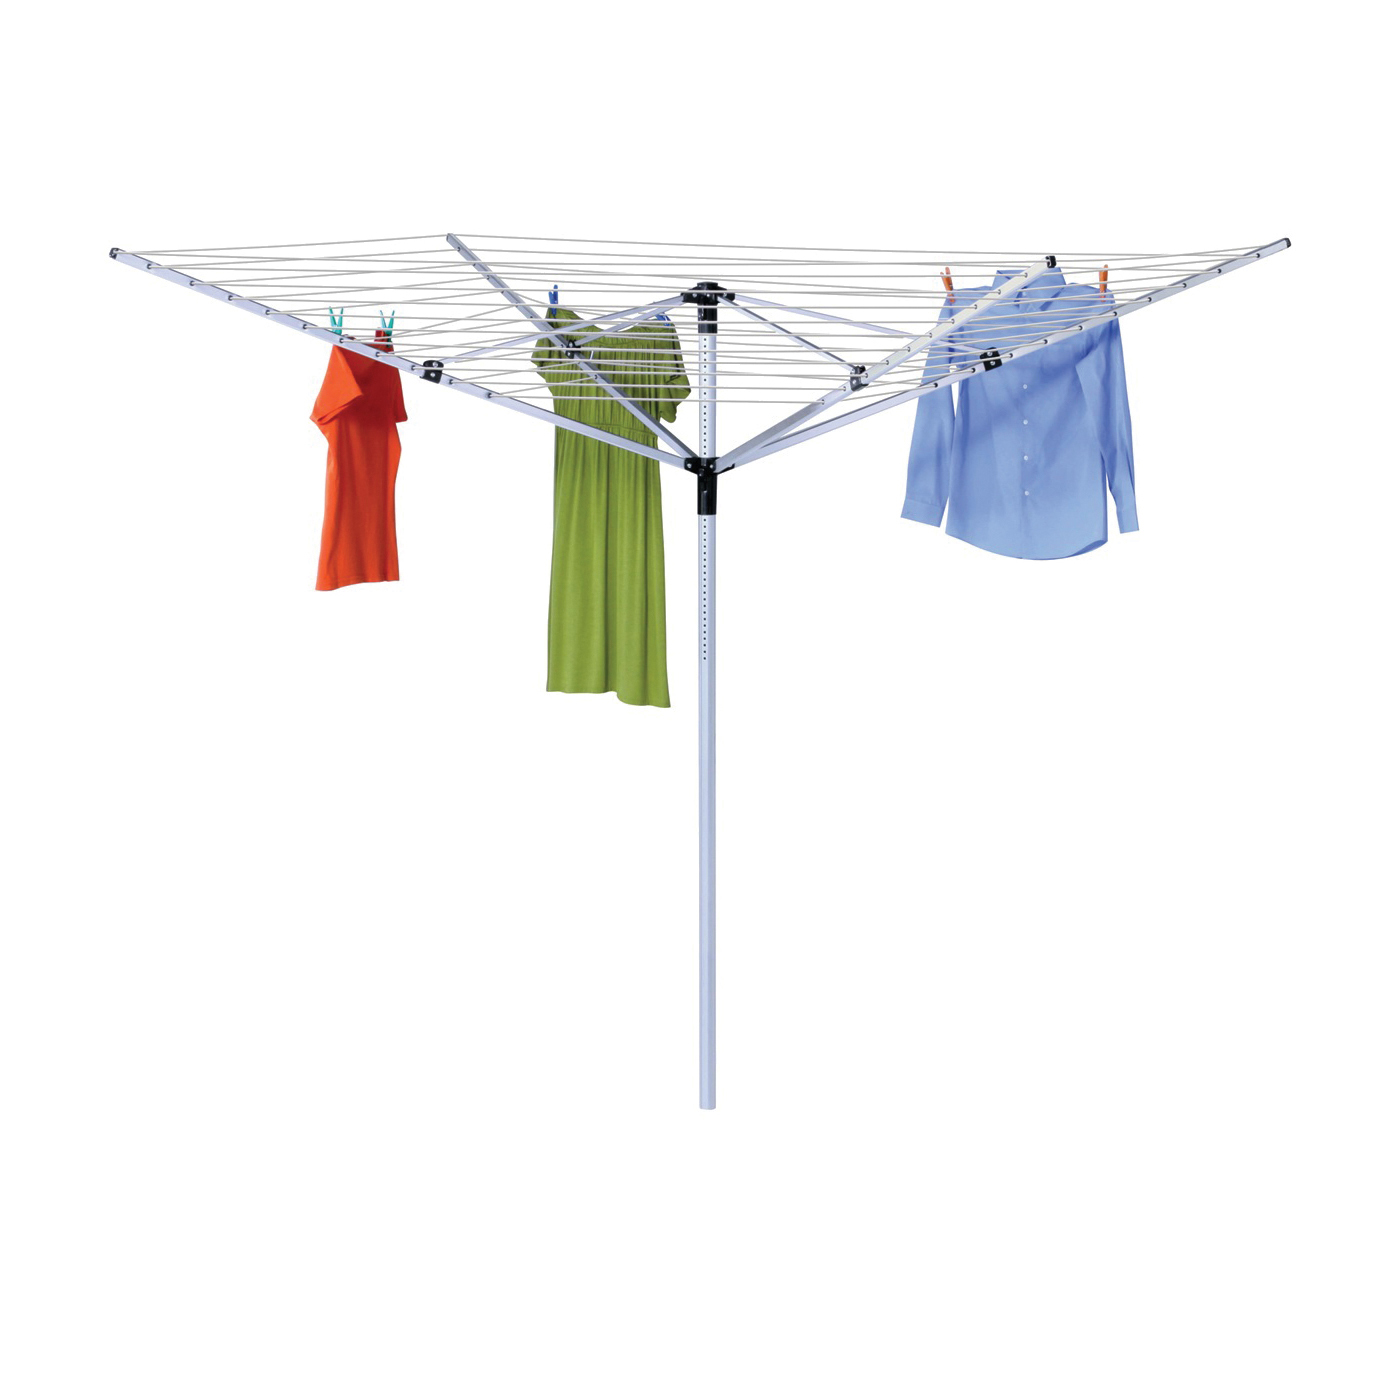 DRY-05262 Umbrella Clothes Dryer, 57 in L, Steel, White